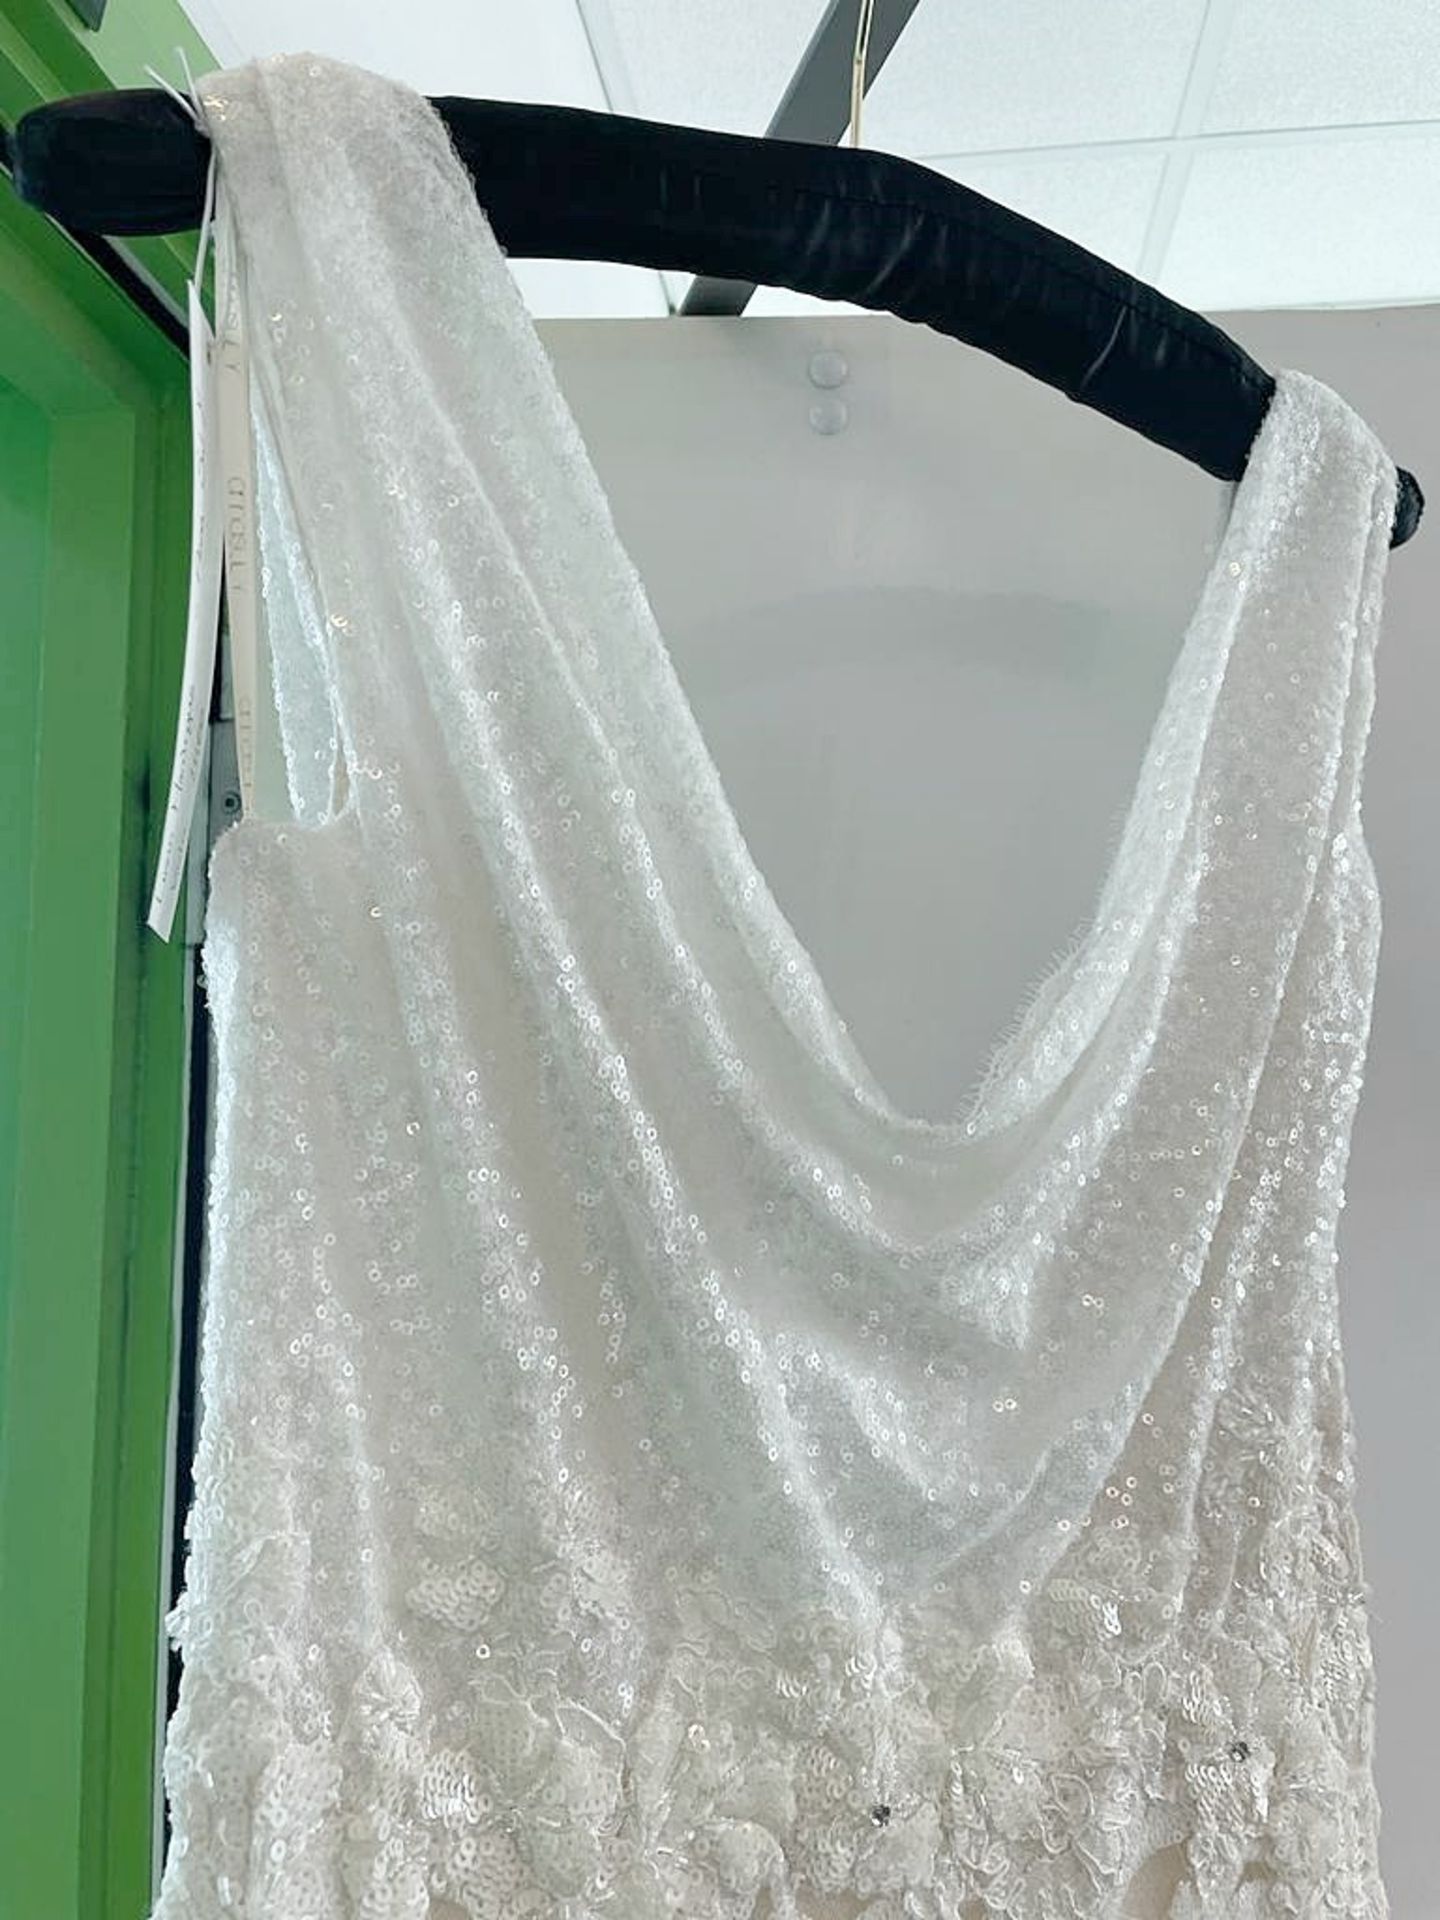 1 x LUSAN MANDONGUS 'Viola' Designer, Fishtail Wedding Dress Bridal Gown With Sequin Decoration - - Image 5 of 10